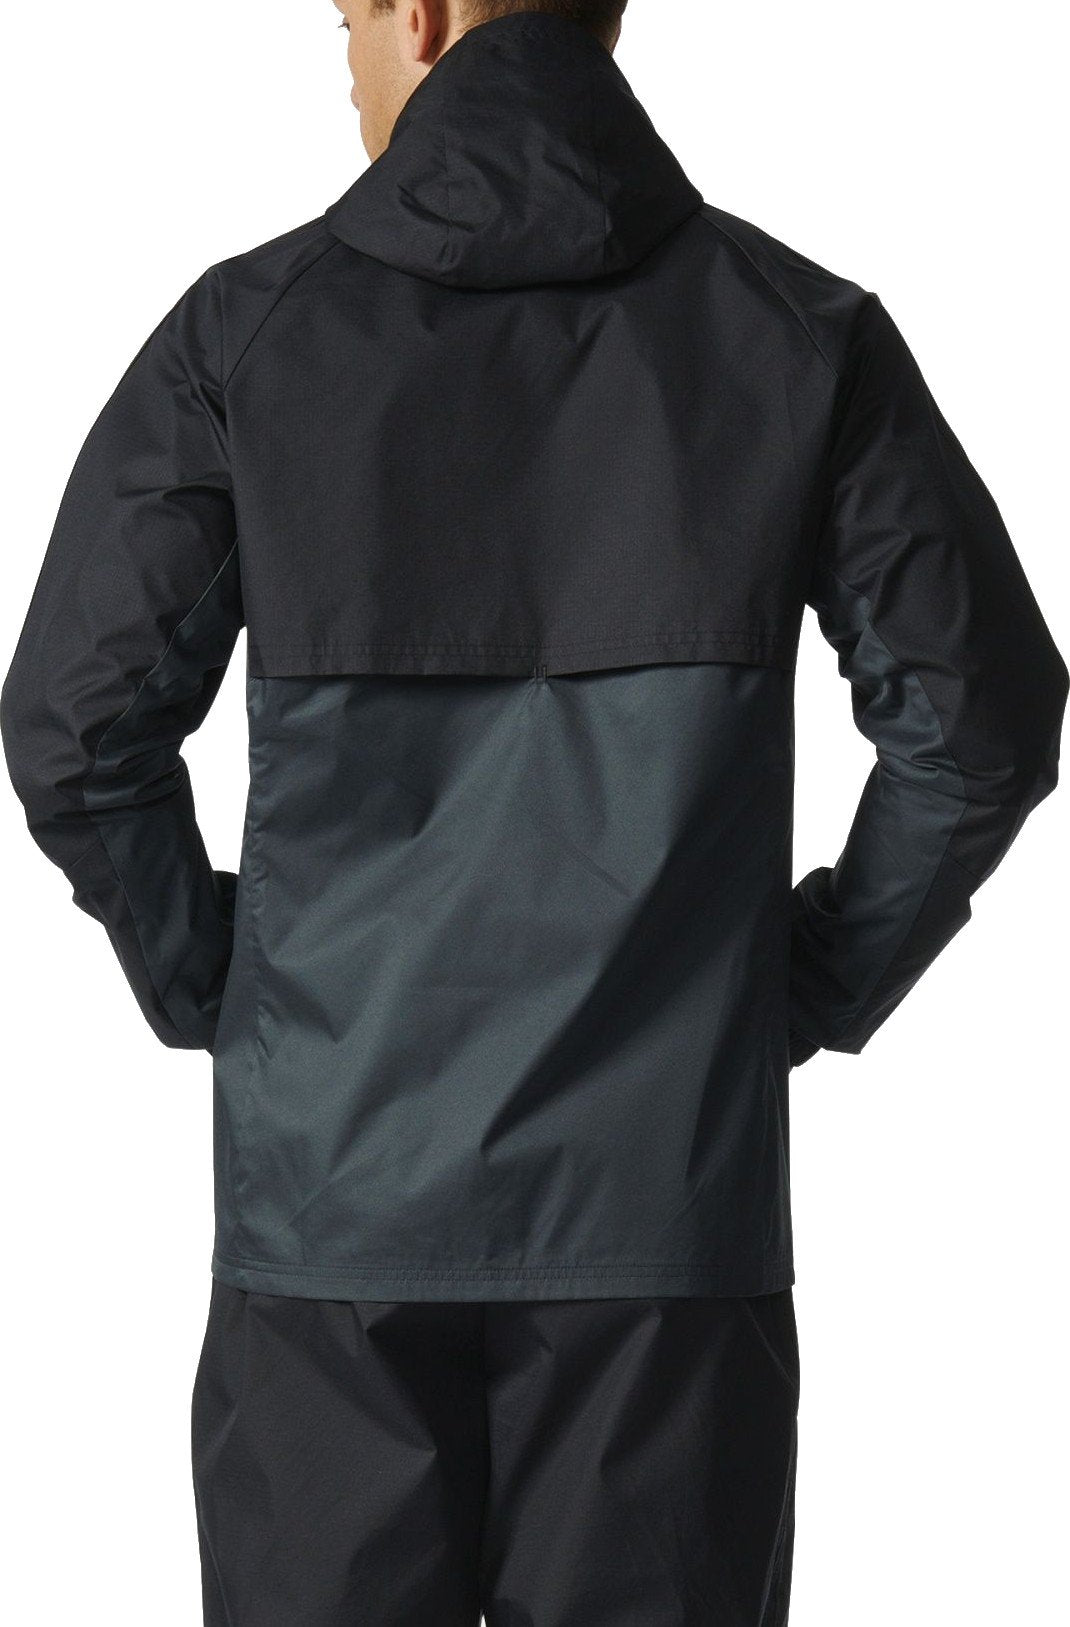 Adidas Tiro 17 Rain Jacket - Black/Grey 